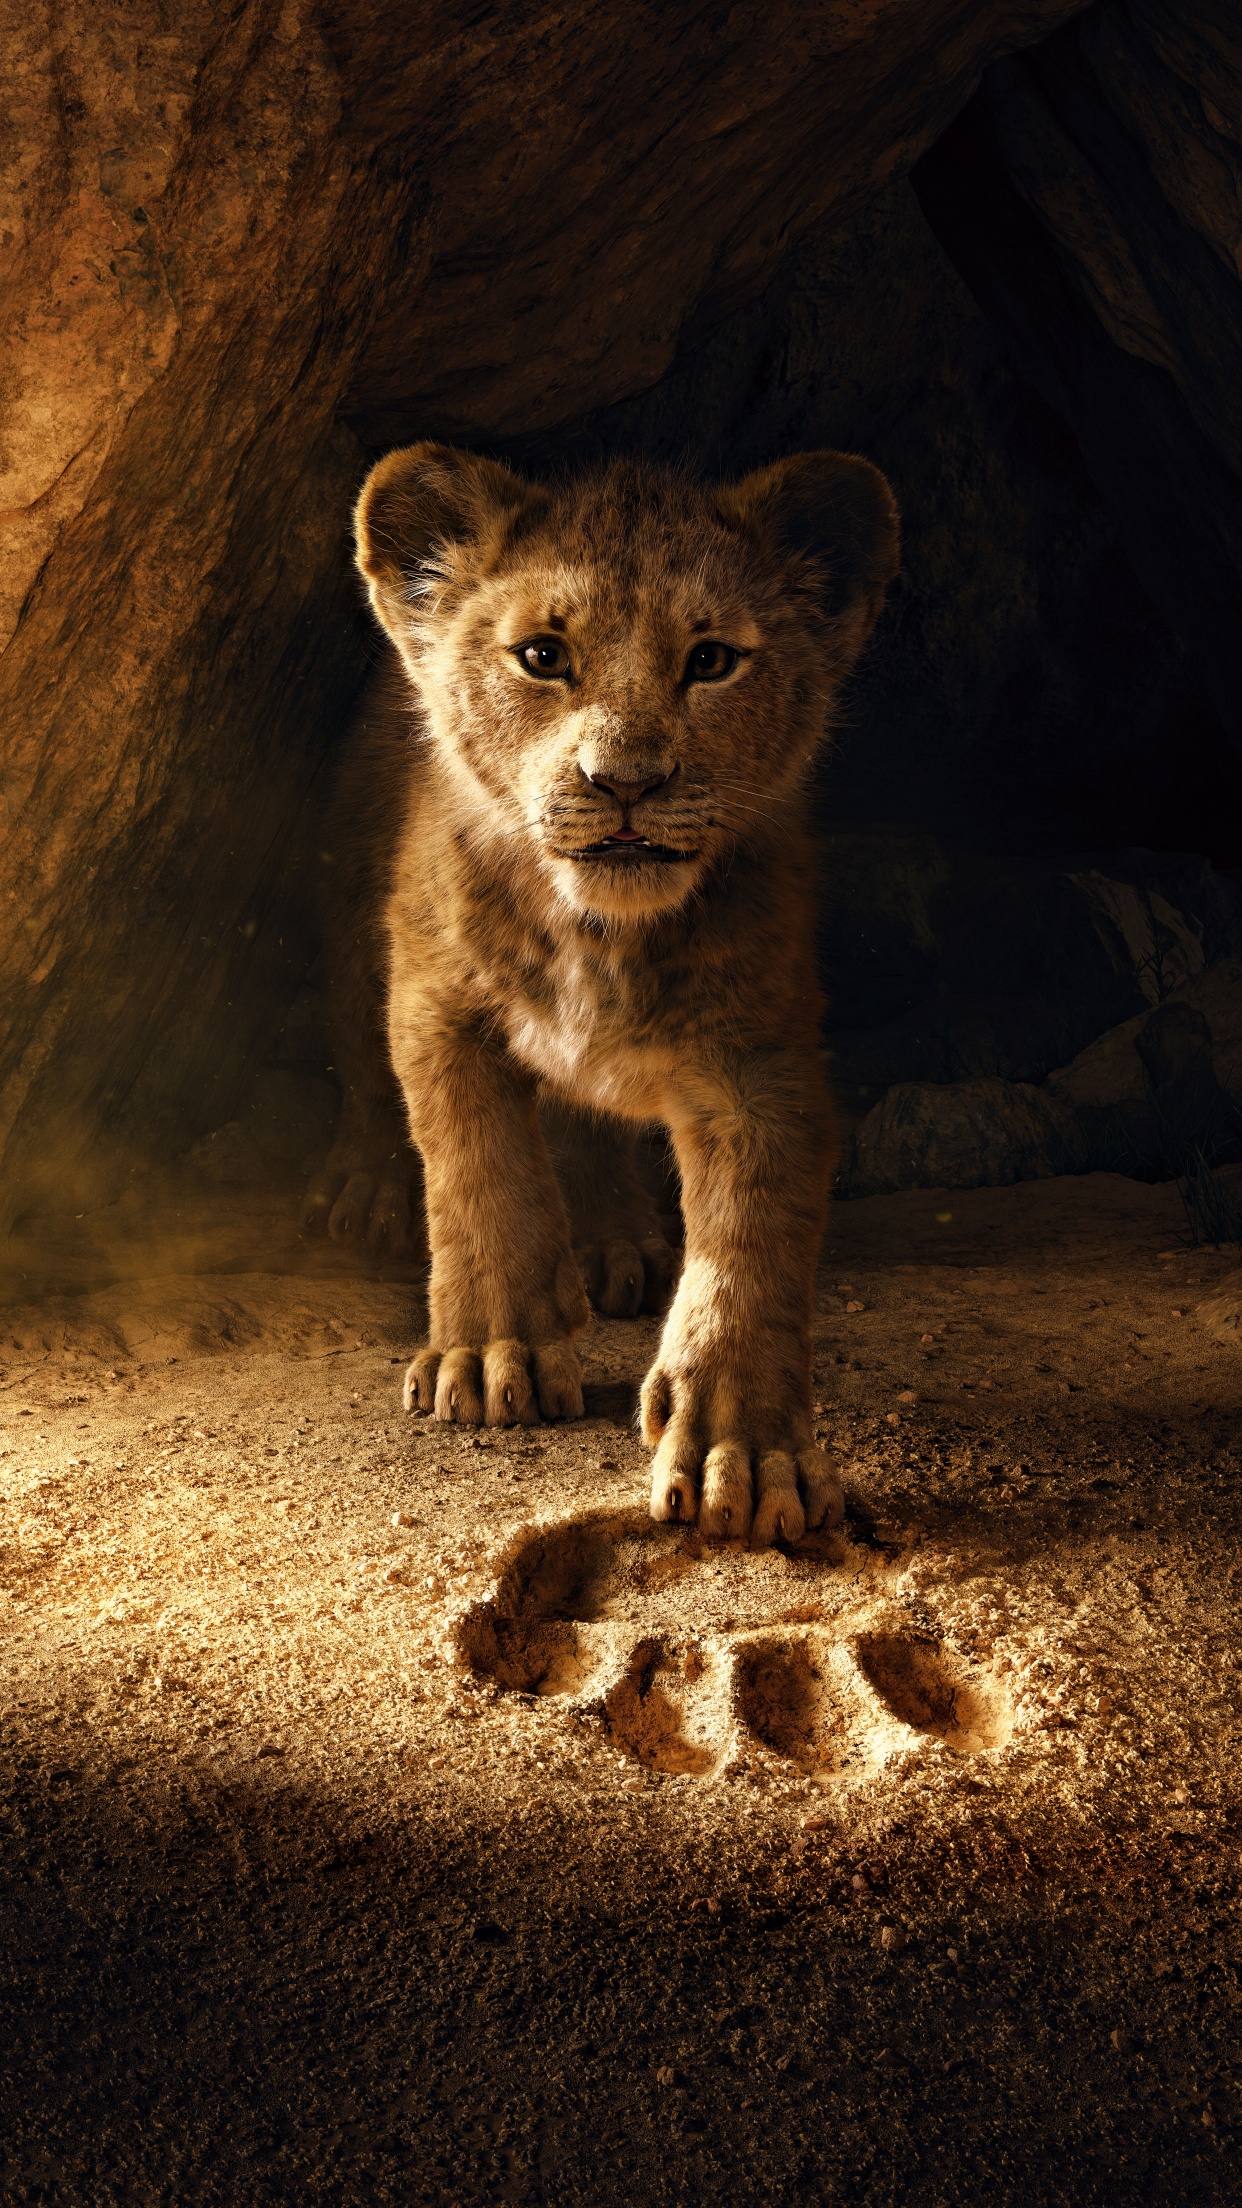 The Lion King 4K Wallpaper, Simba, Lion cu   b, 5K, Movies, #944